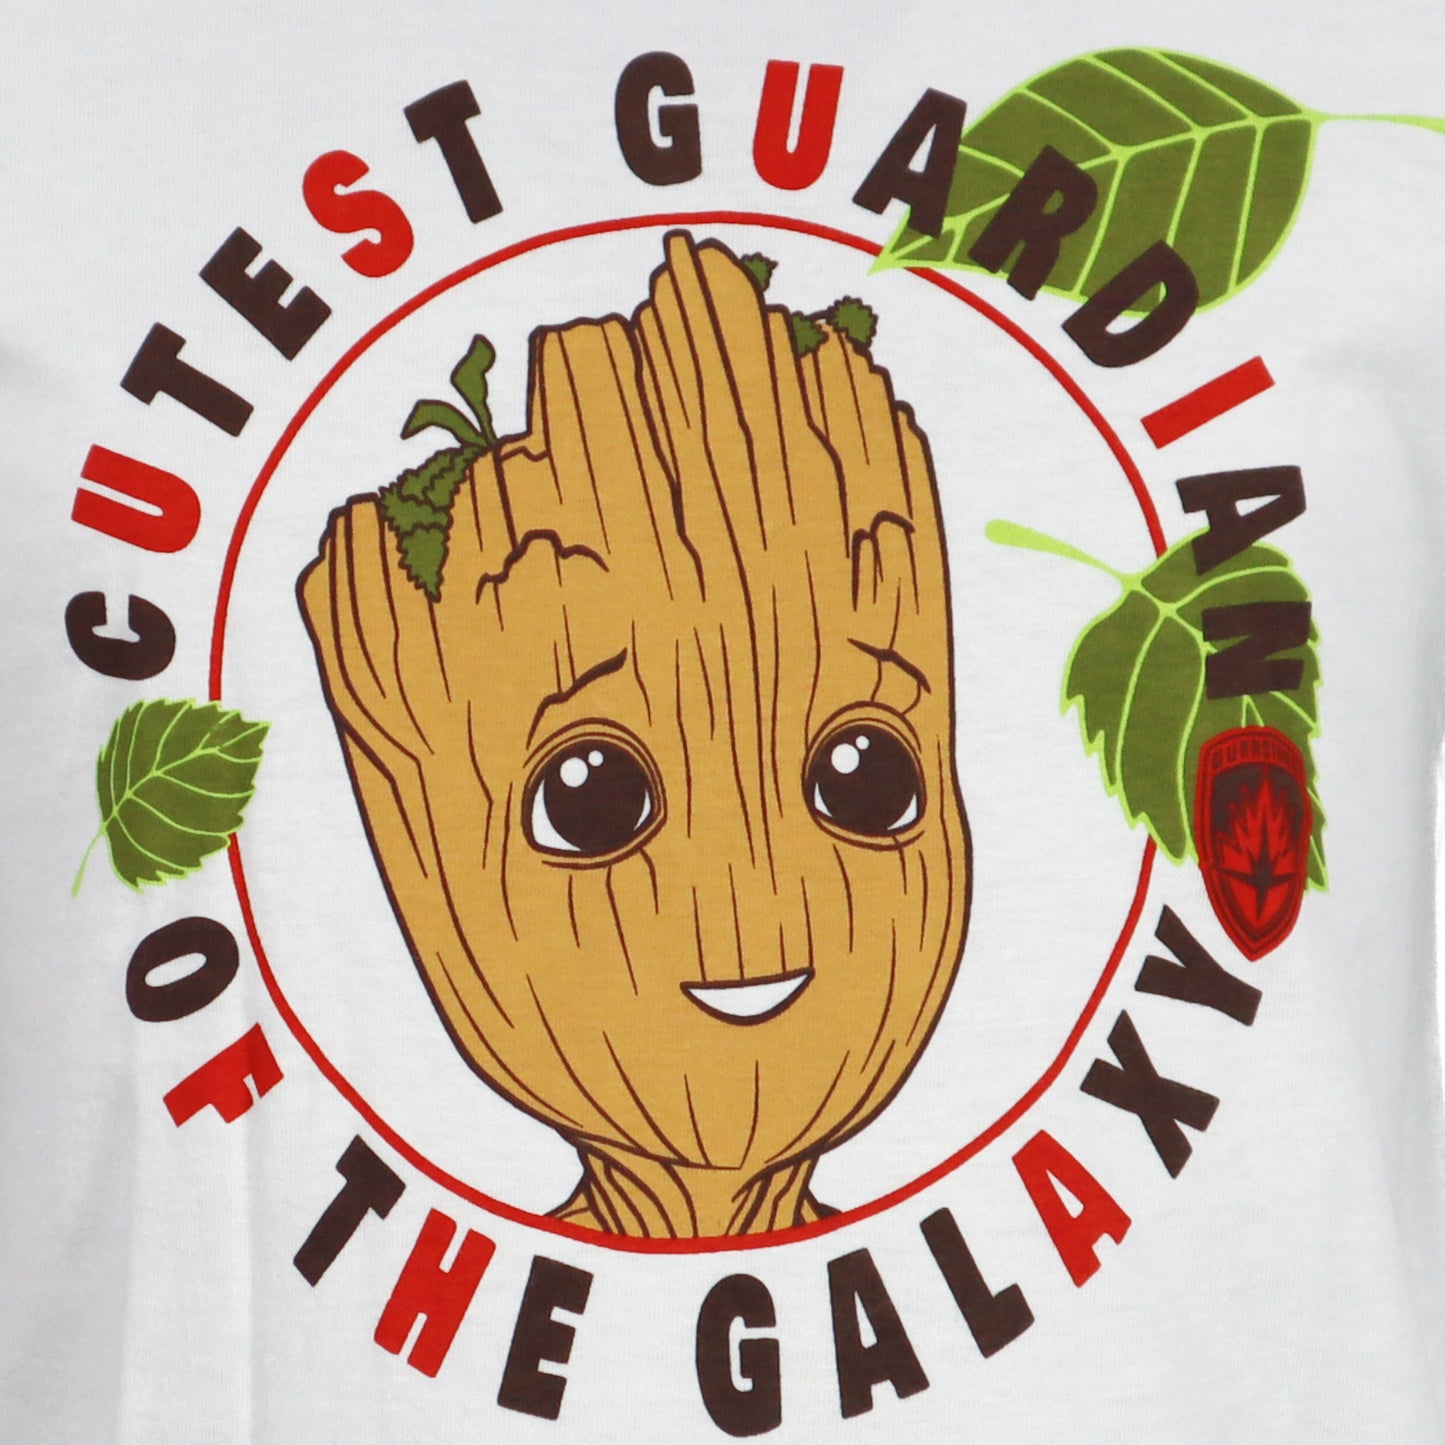 Guardians of the Galaxy Baby Groot Mädchen Kinder T-Shirt Shirt